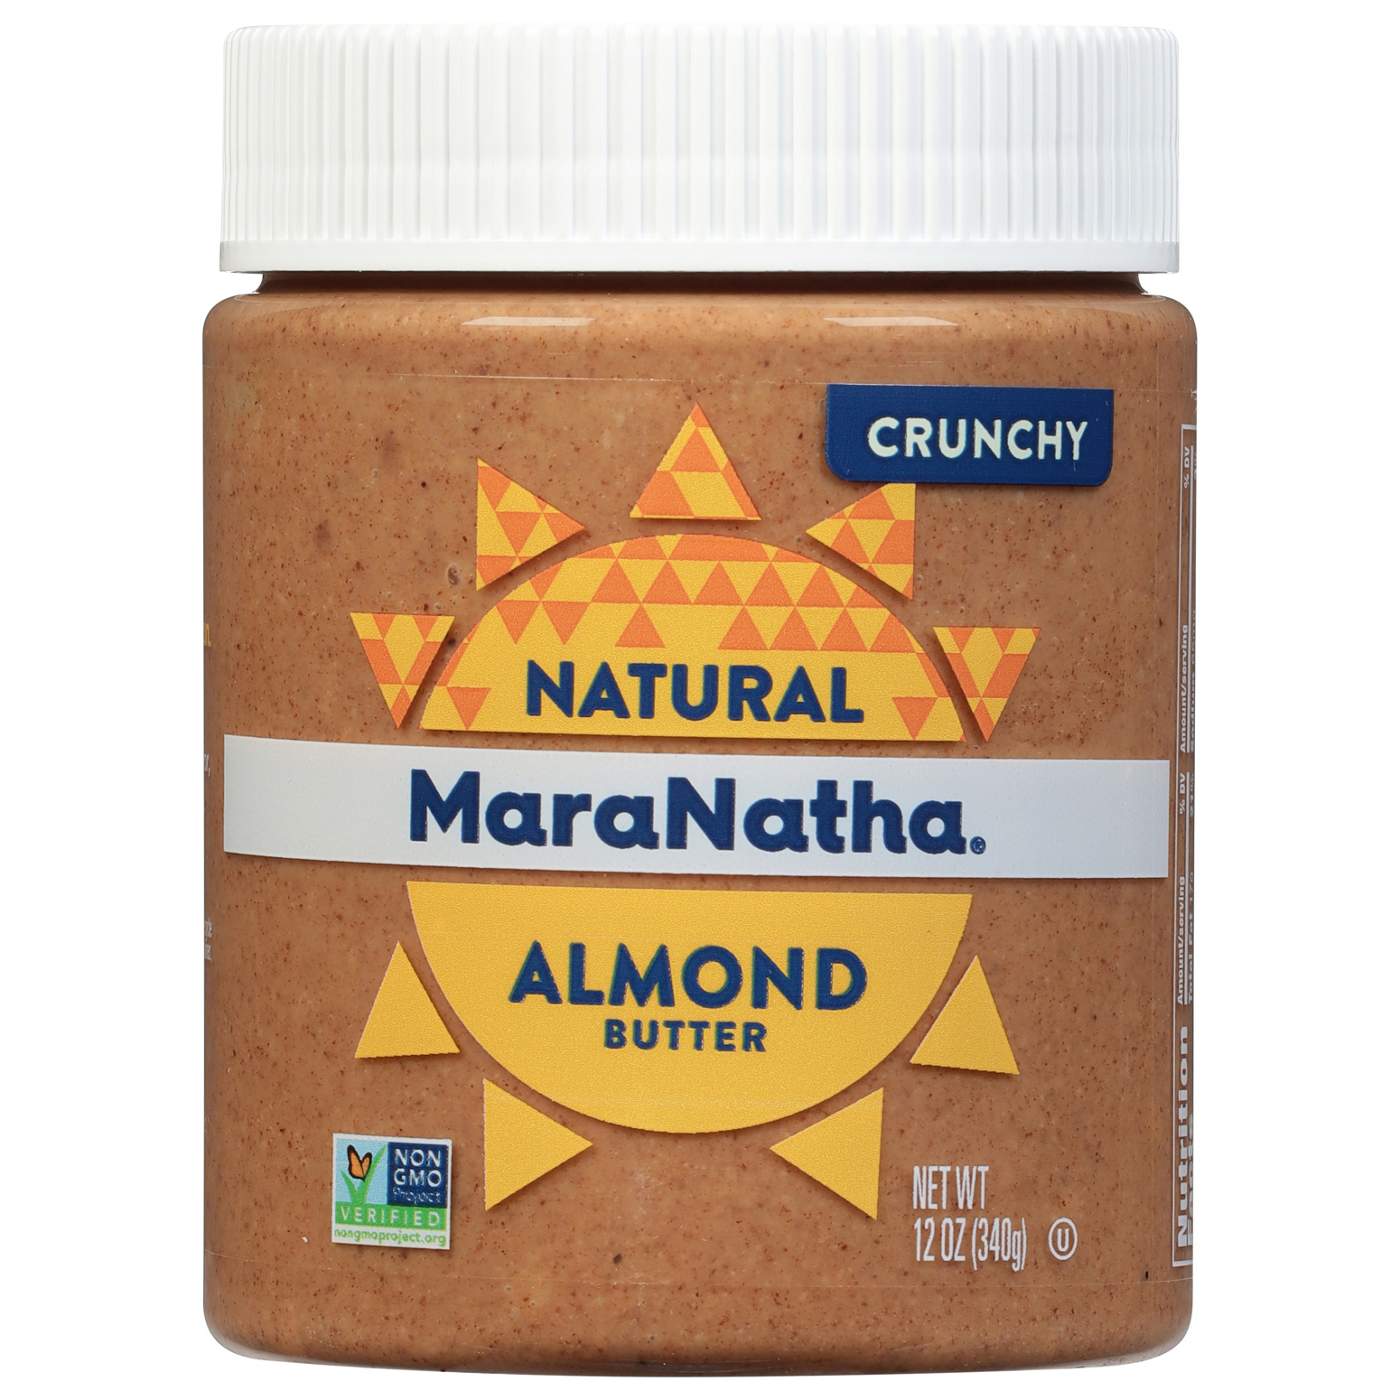 MaraNatha All Natural No Stir Crunchy Almond Butter; image 1 of 2